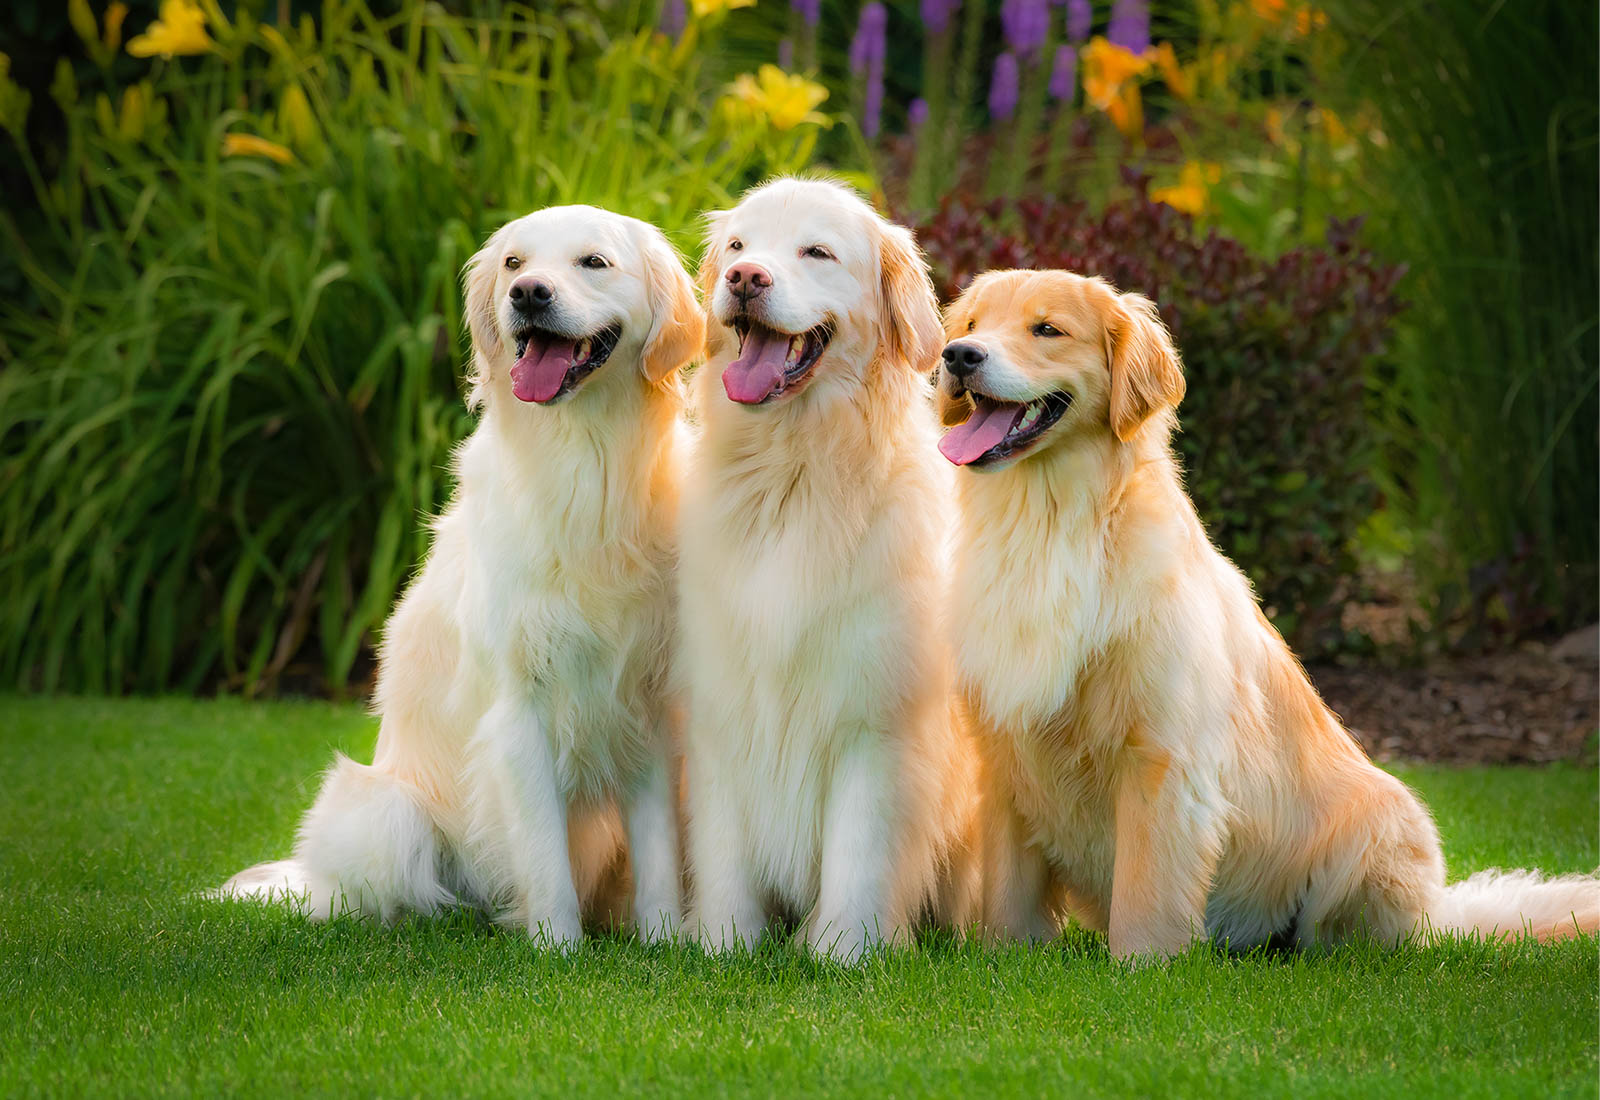 Three Golden Retrievers smiling